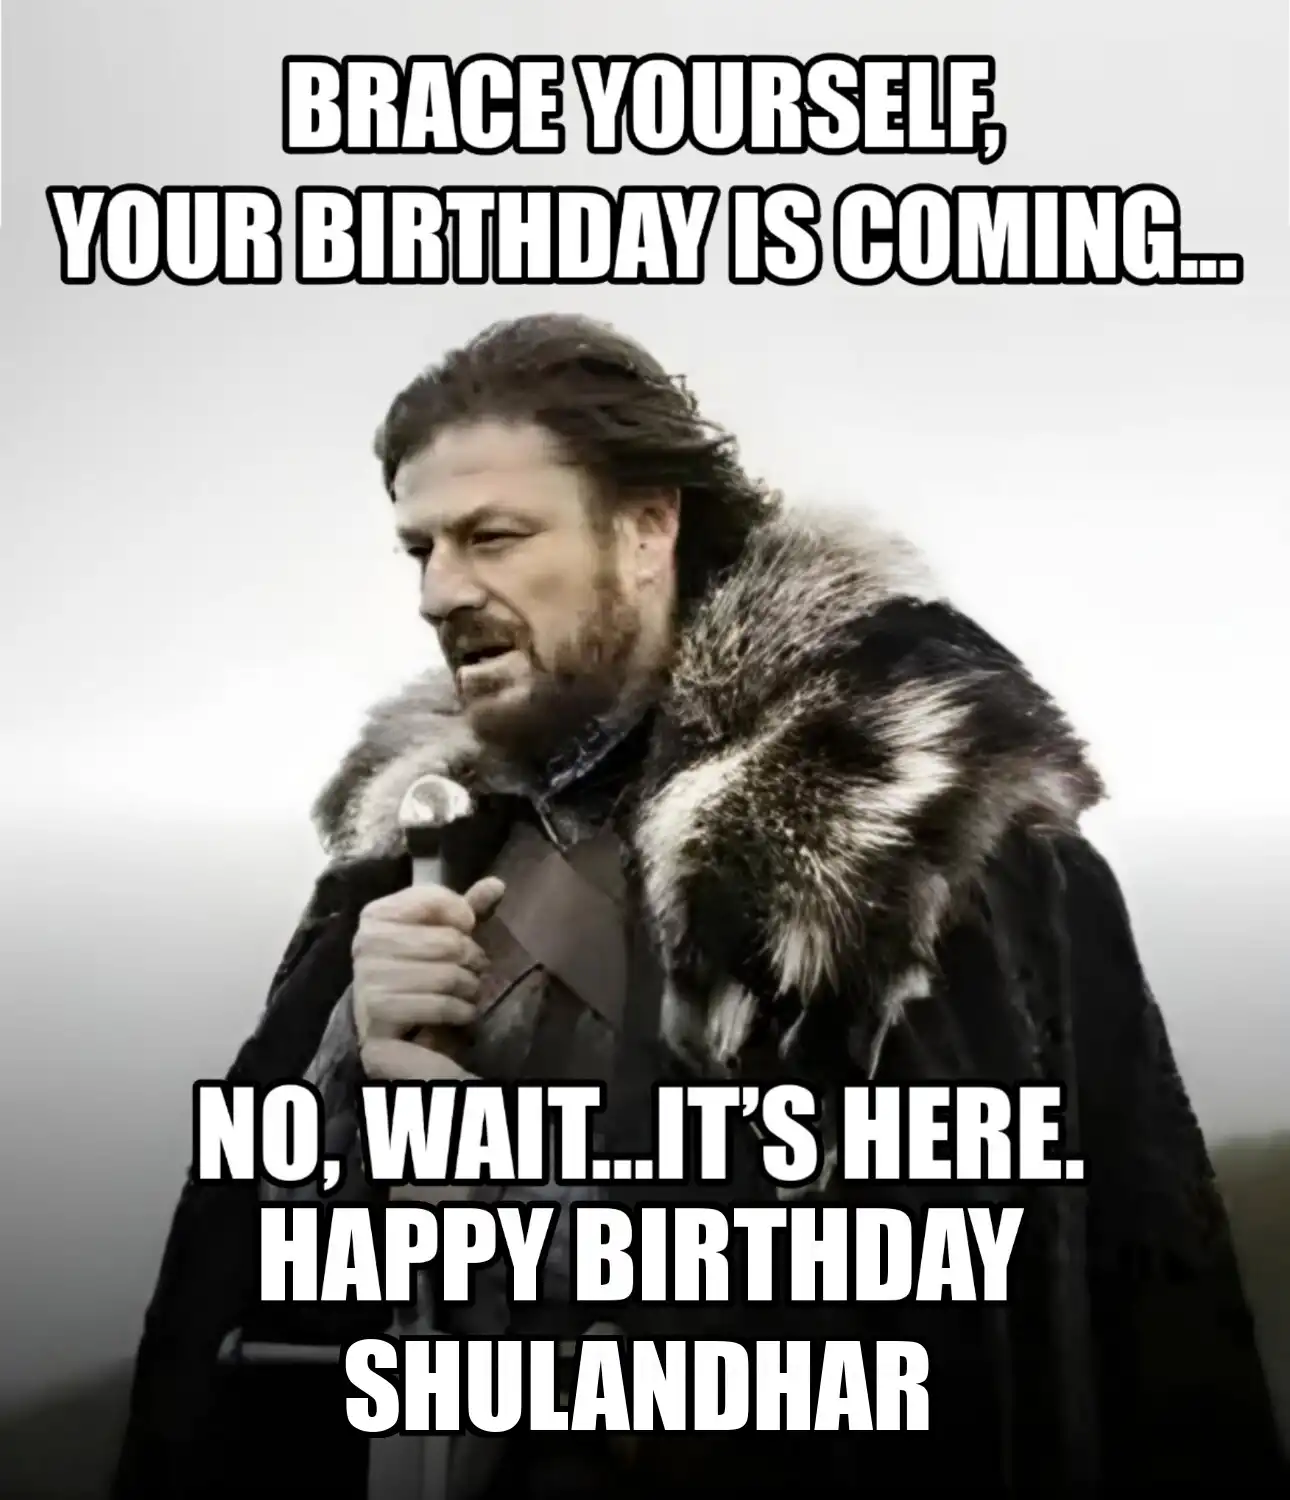 Happy Birthday Shulandhar Brace Yourself Your Birthday Is Coming Meme